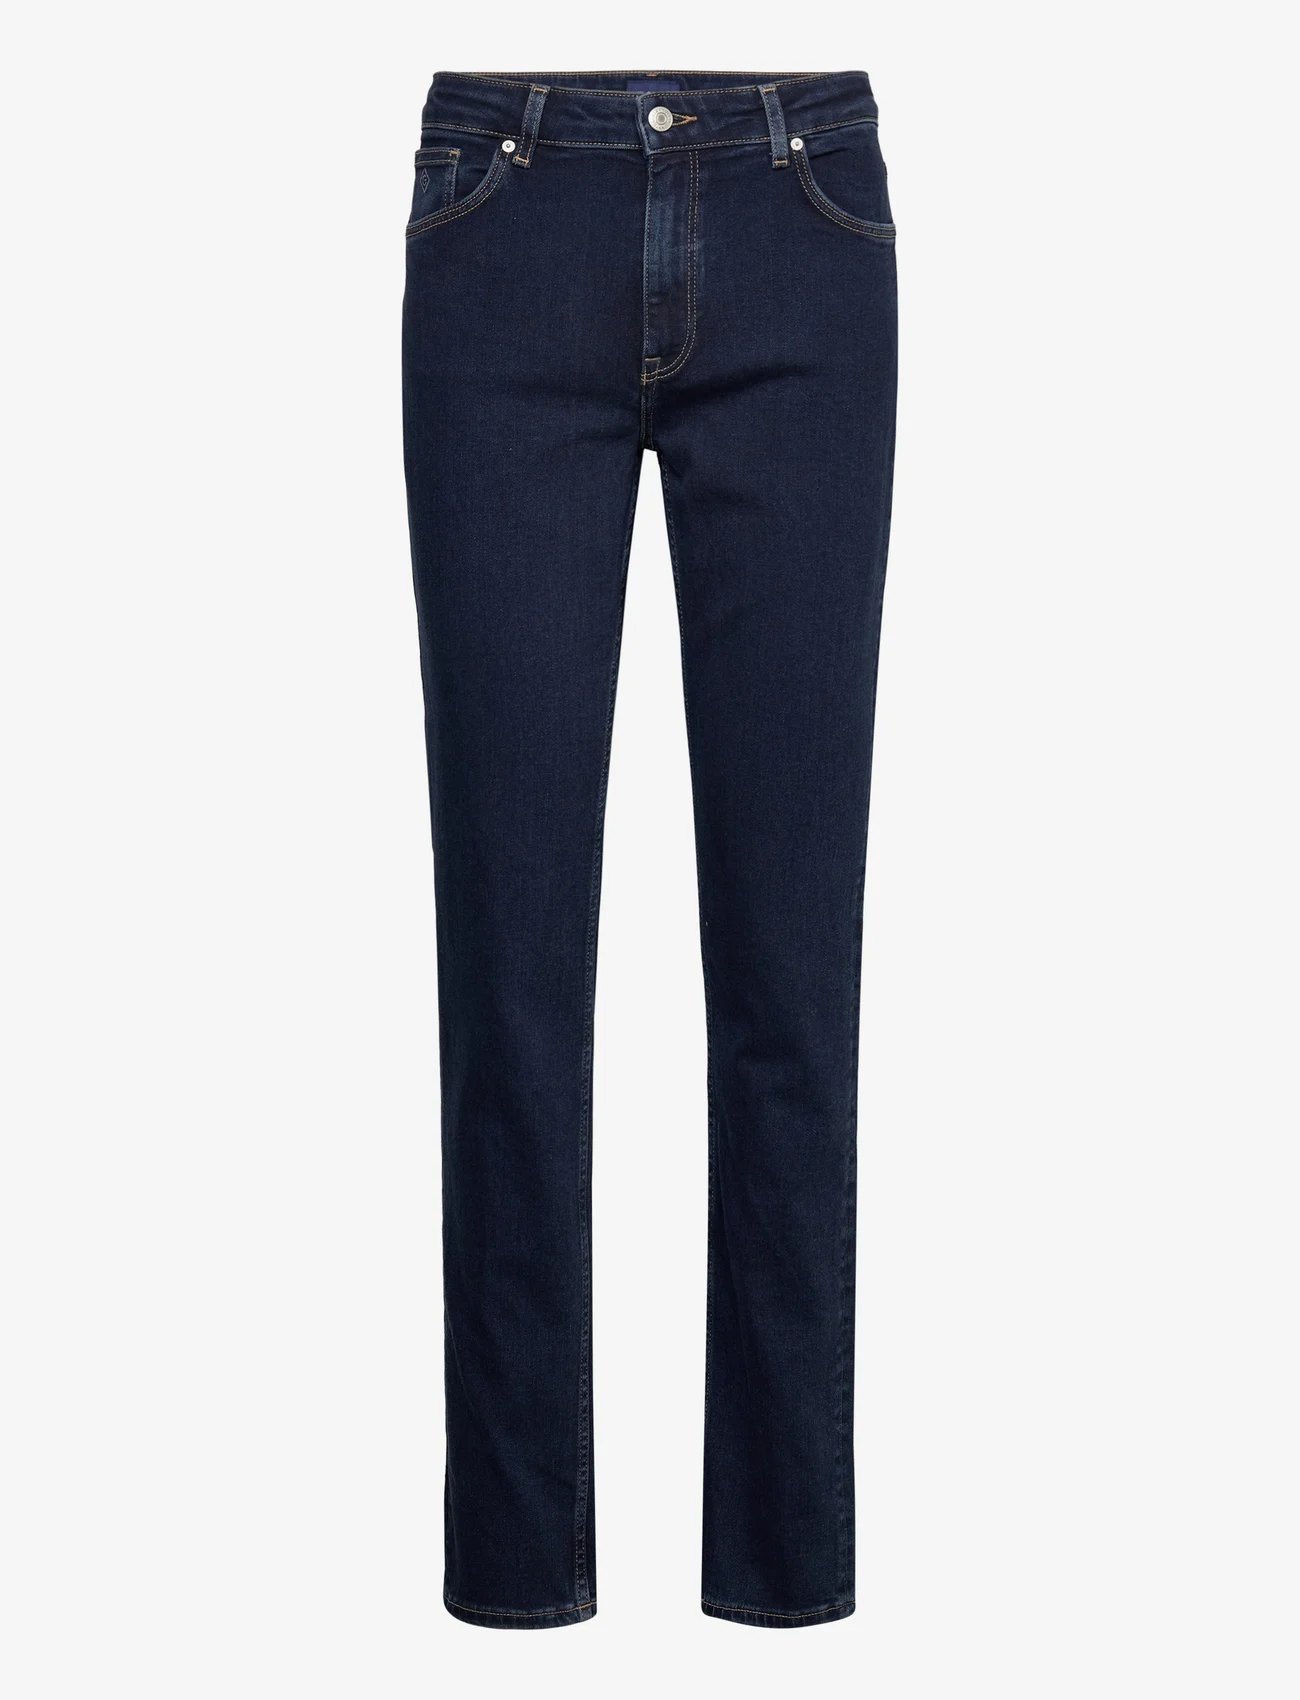 GANT - FARLA SUPER STRETCH JEANS - raka jeans - dark blue broken in - 0